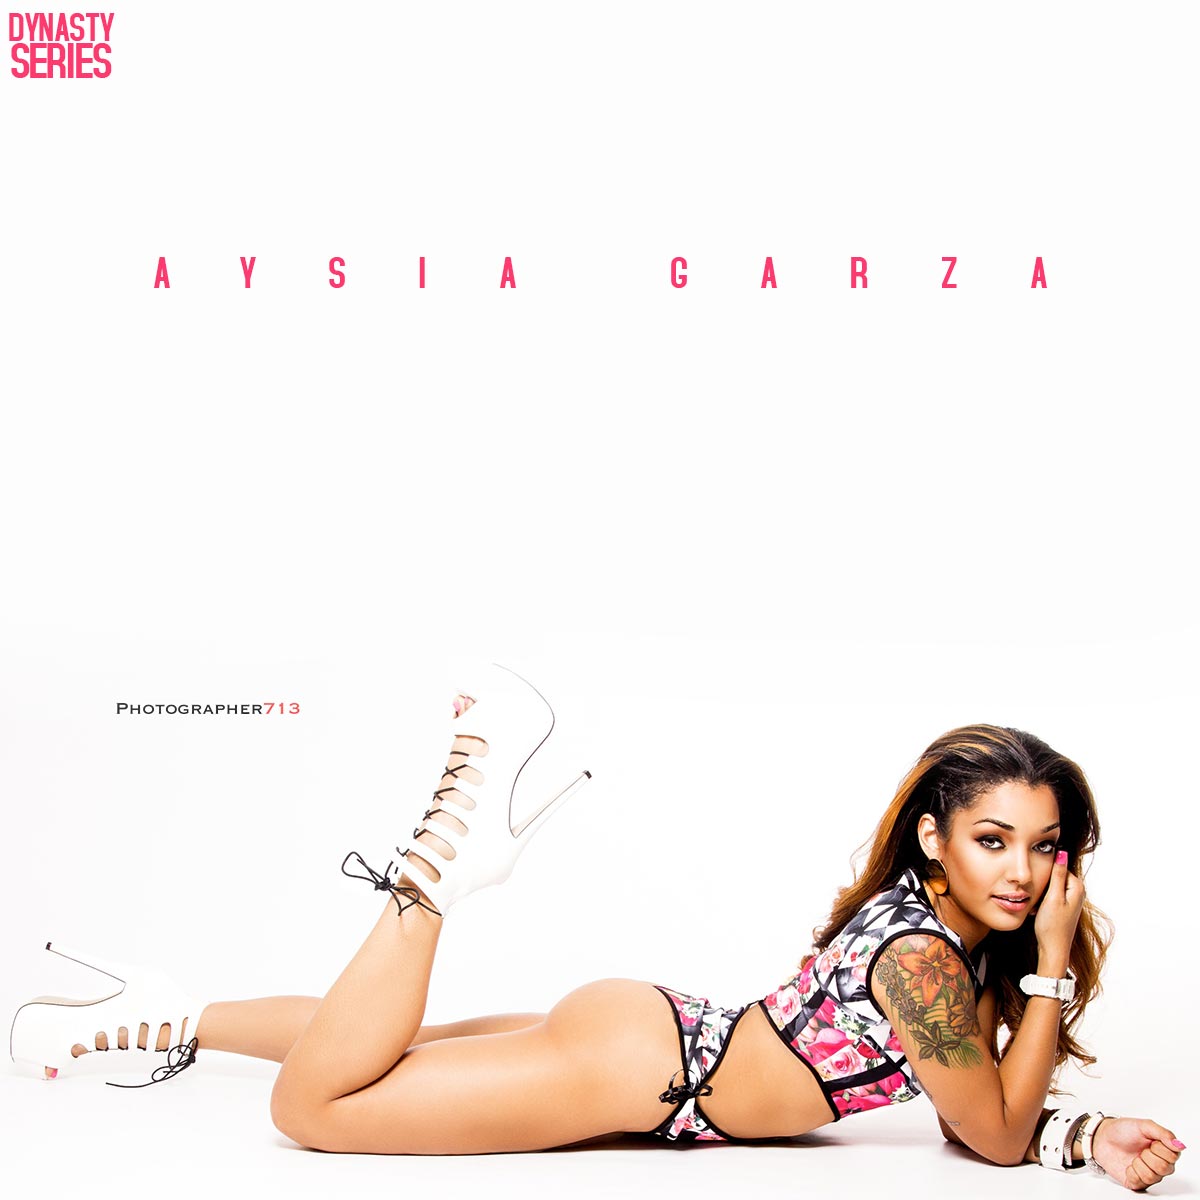 Aysia-Garza-bgc-dynastyseries-07.